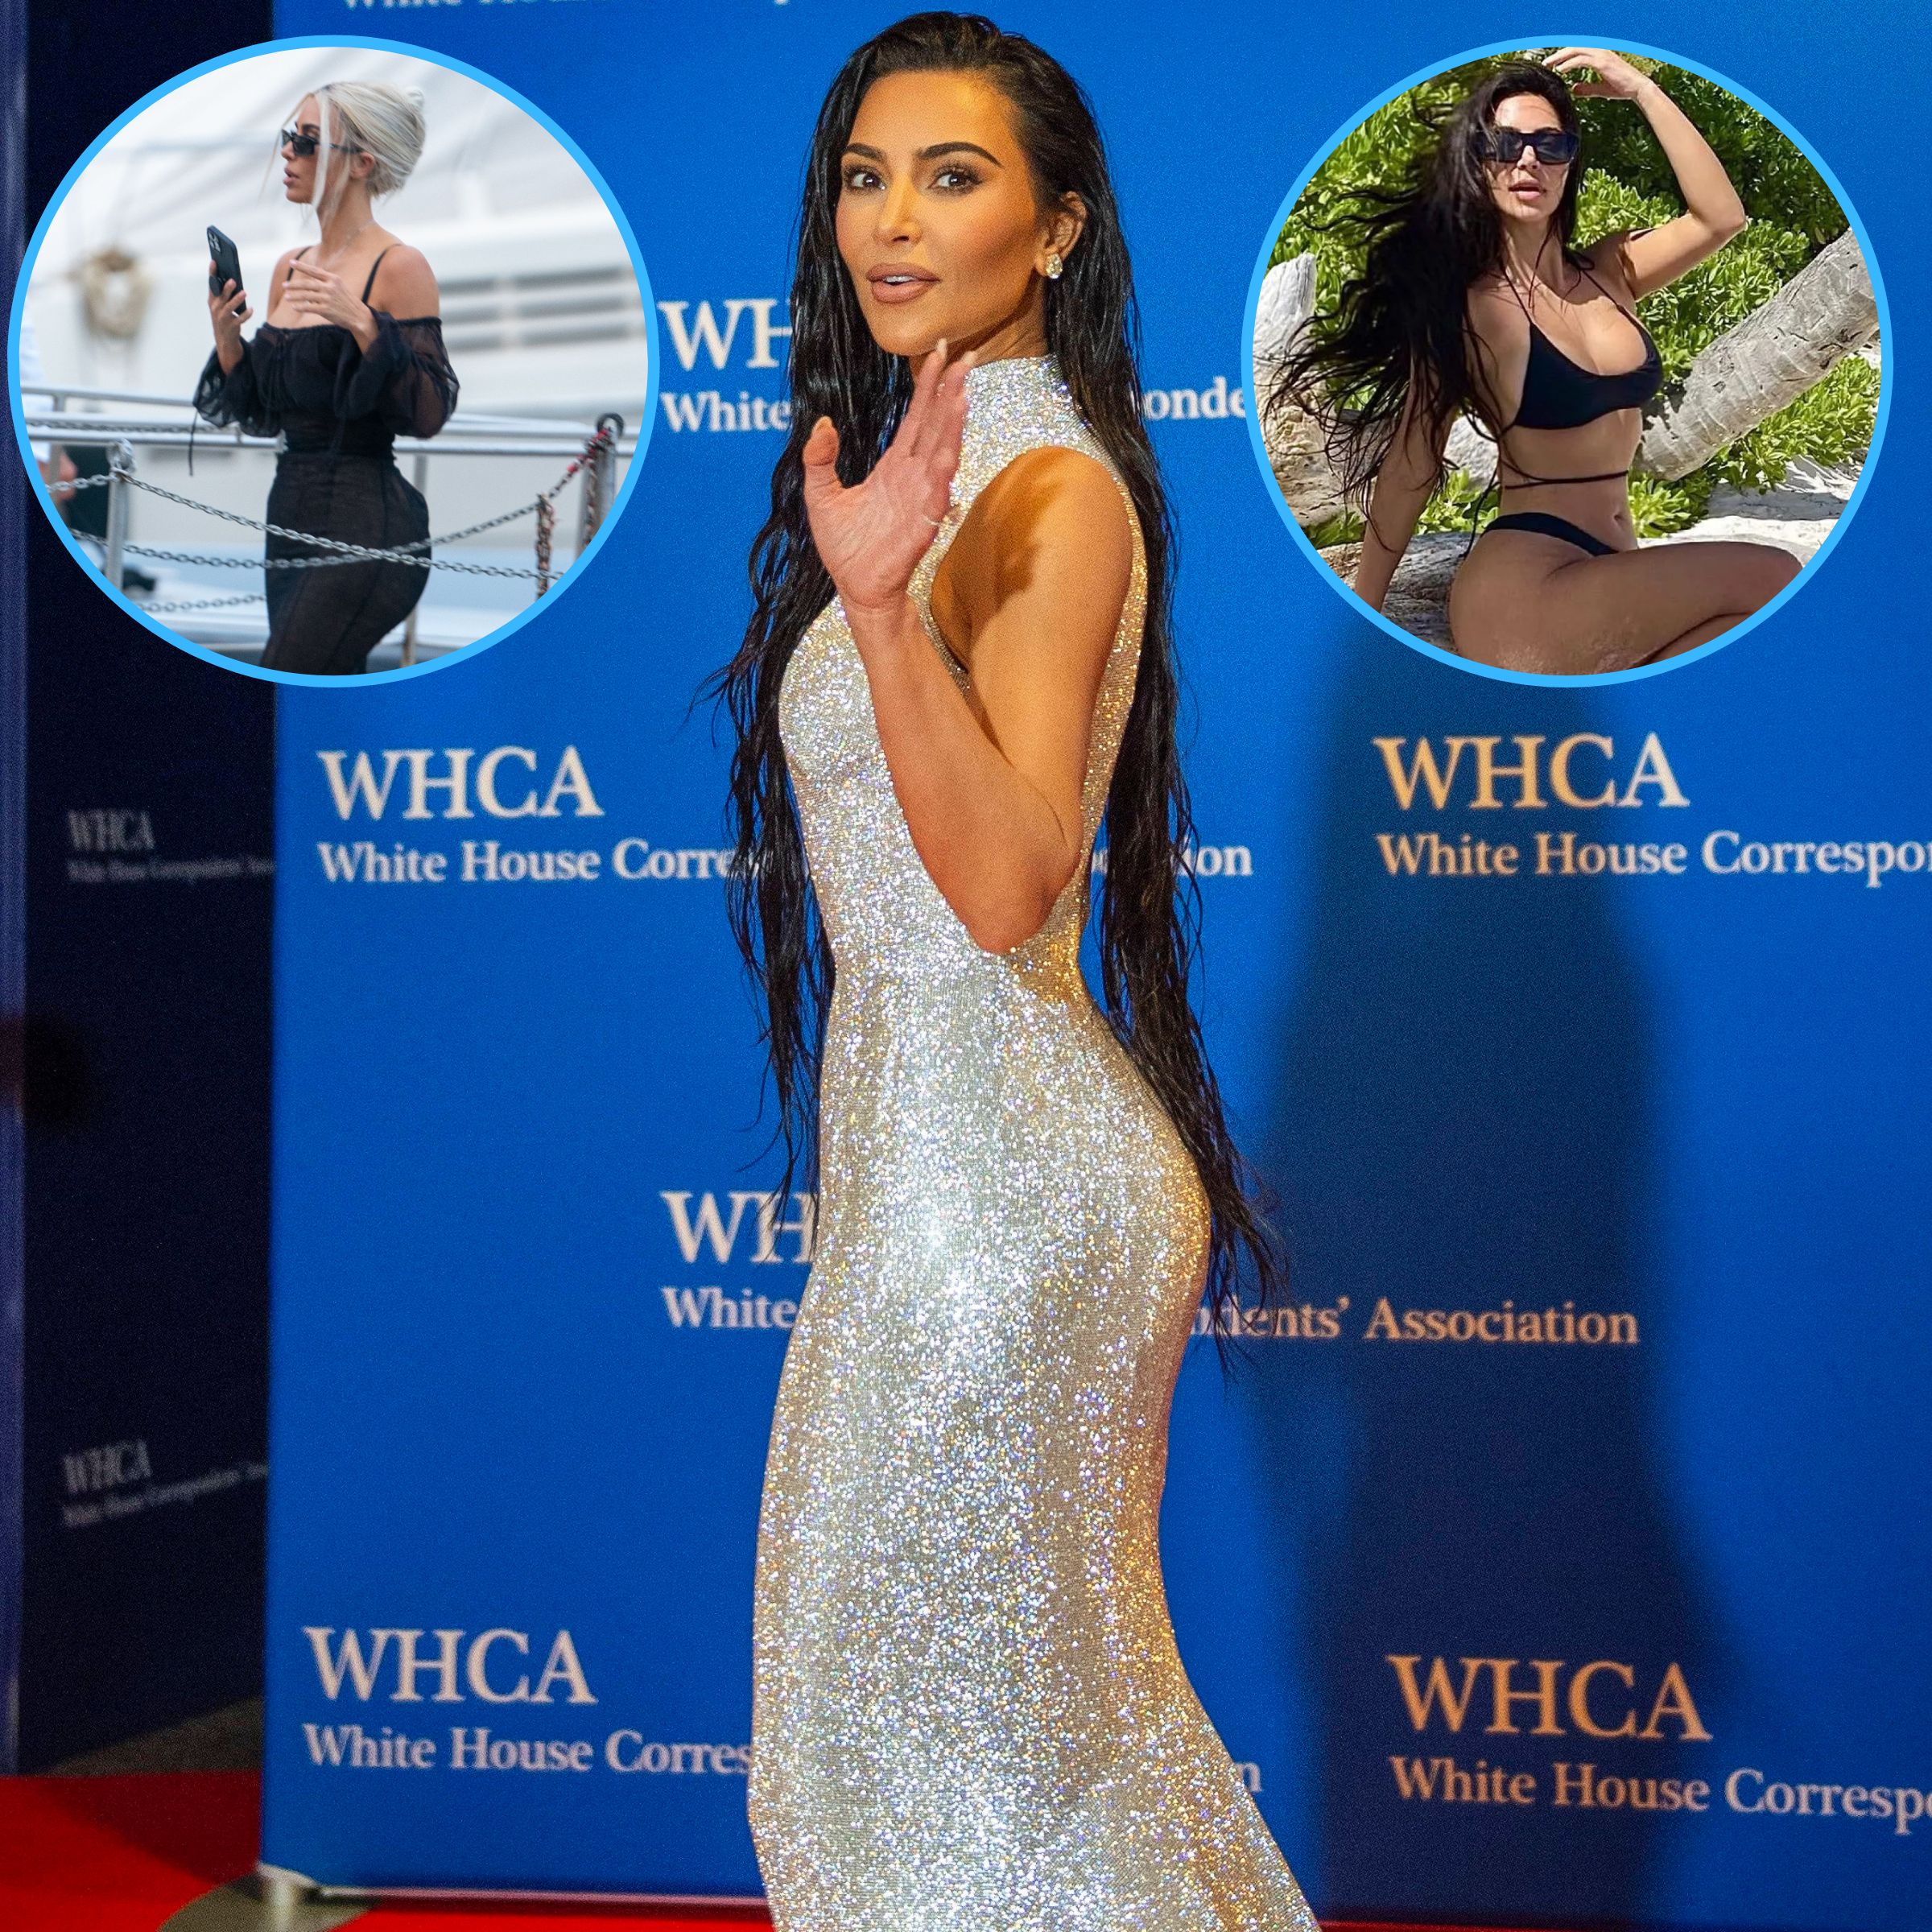 Celebrity Porn Kim Kardashian Ass - Kim Kardashian Butt Photos: Best Pics Showing Off Her Curves